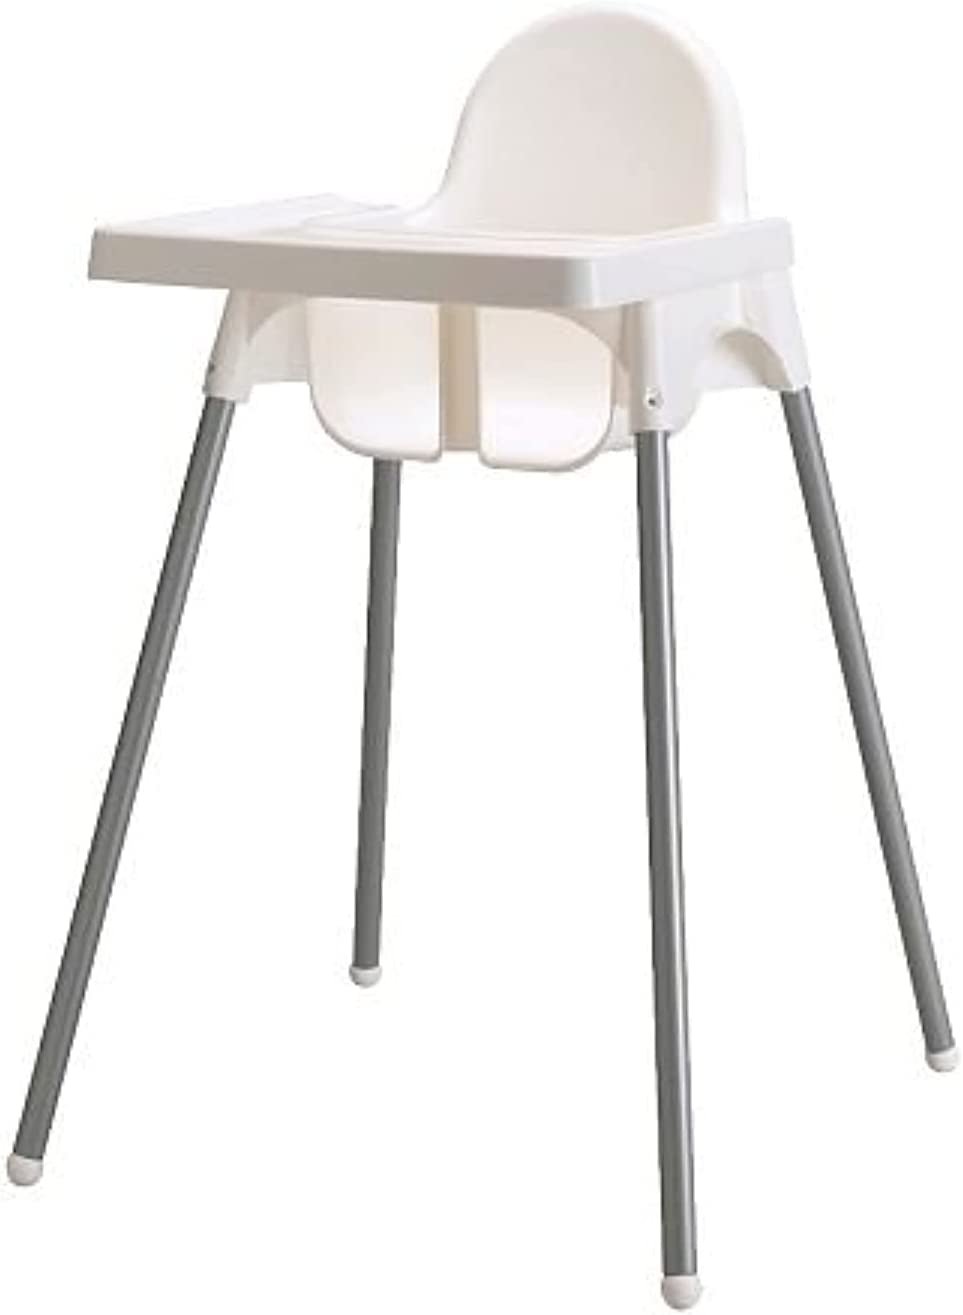 IKEA ANTILOOP Highchair with Safety Belt, White, Silver Color and ANTILOOP Highchair White